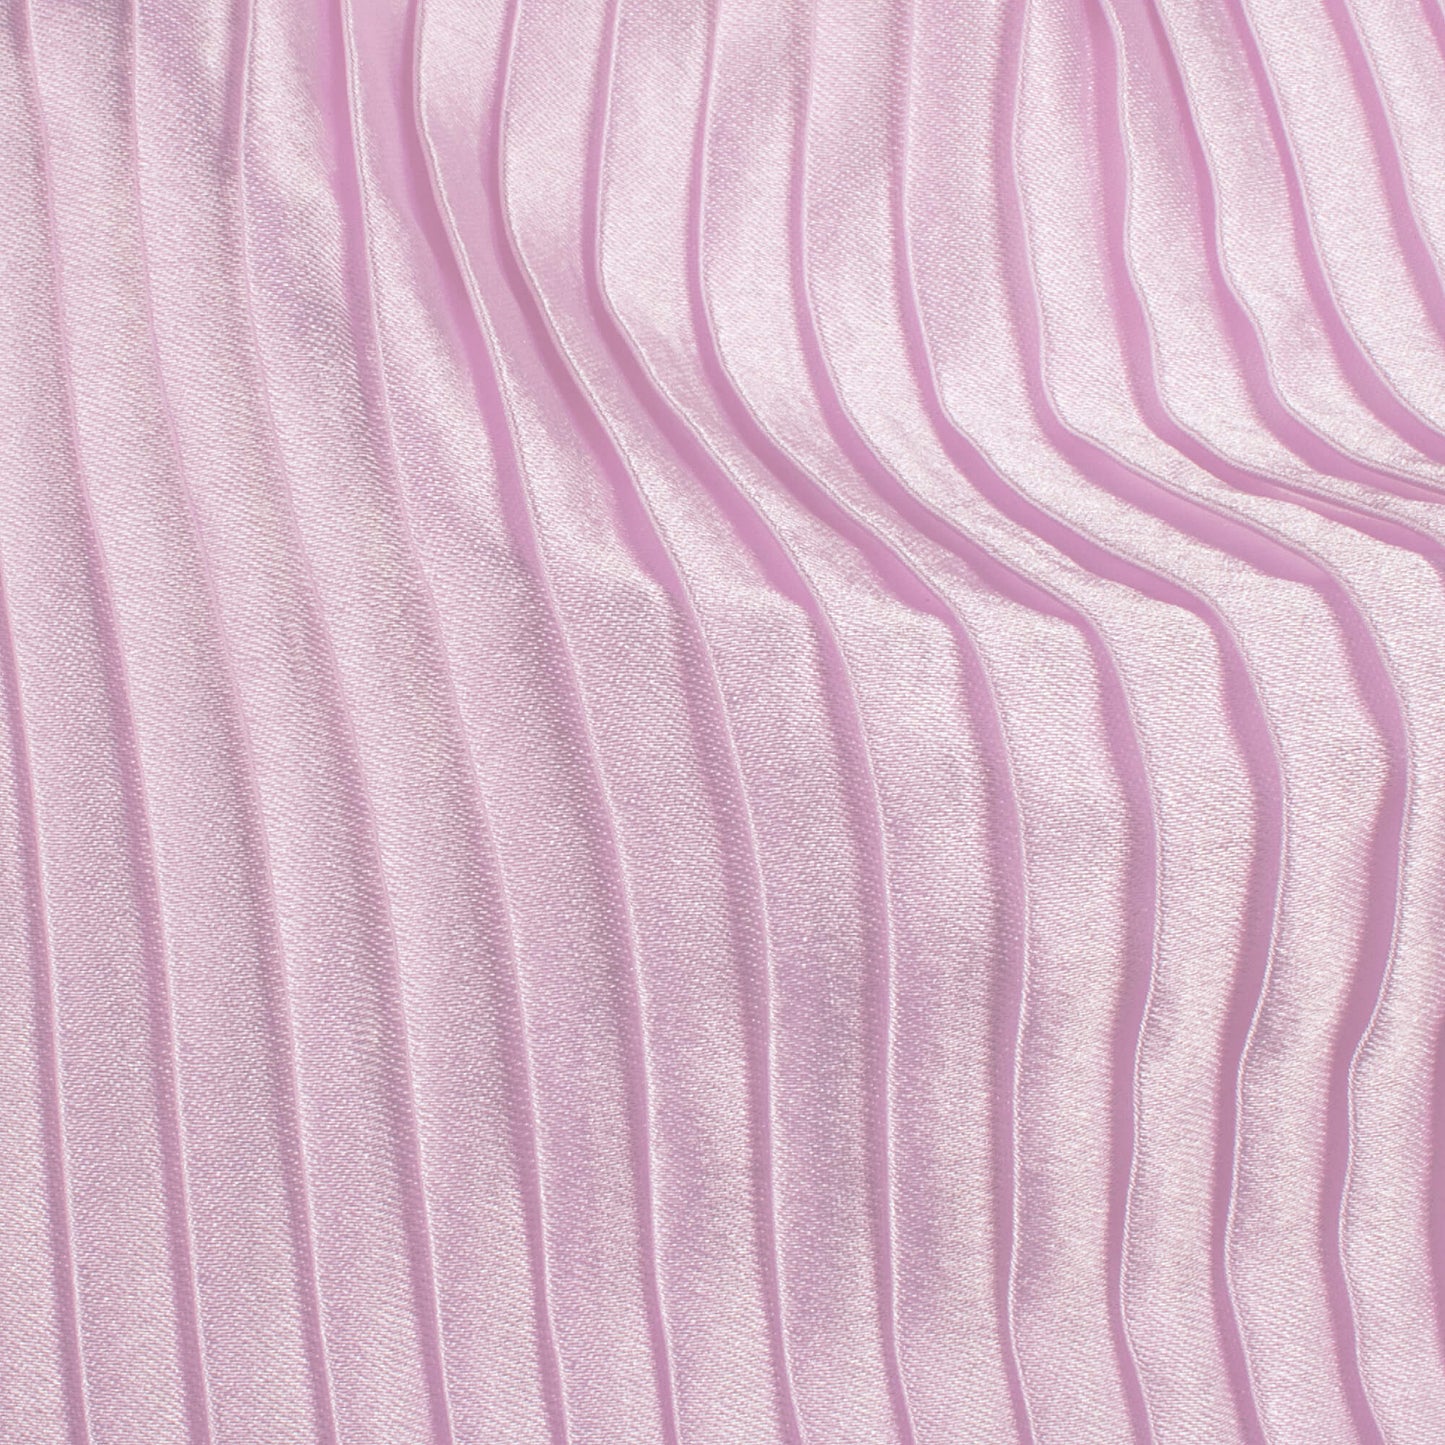 Lace Pink Plain Japan Satin Pleated Fabric